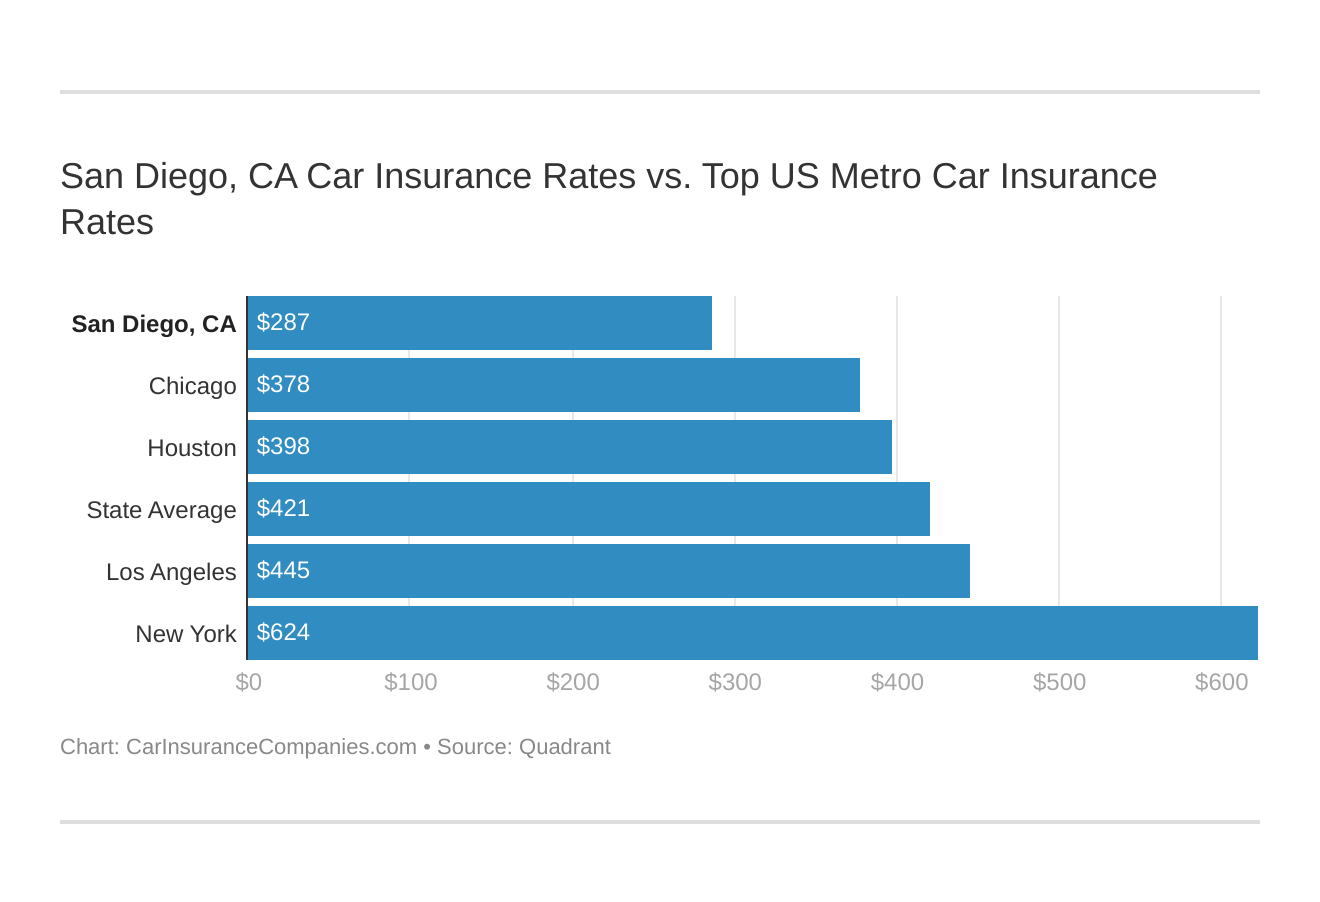 San Diego, CA Car Insurance Rates vs. Top US Metro Car Insurance Rates